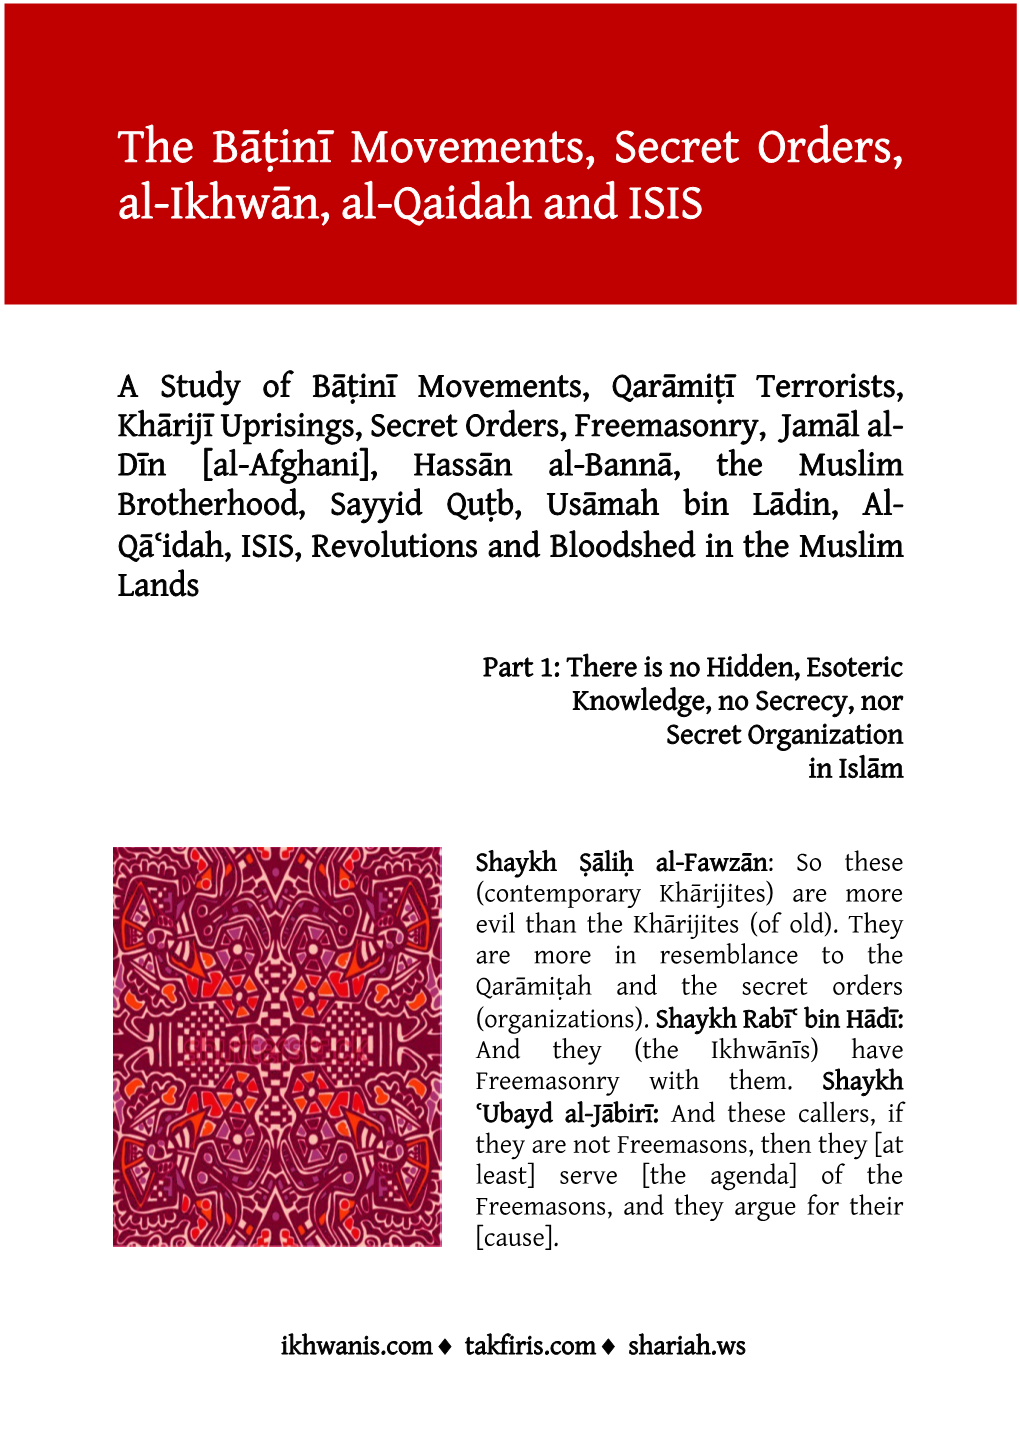 The Bāṭinī Movements, Secret Orders, Al-Ikhwān, Al-Qaidah and ISIS